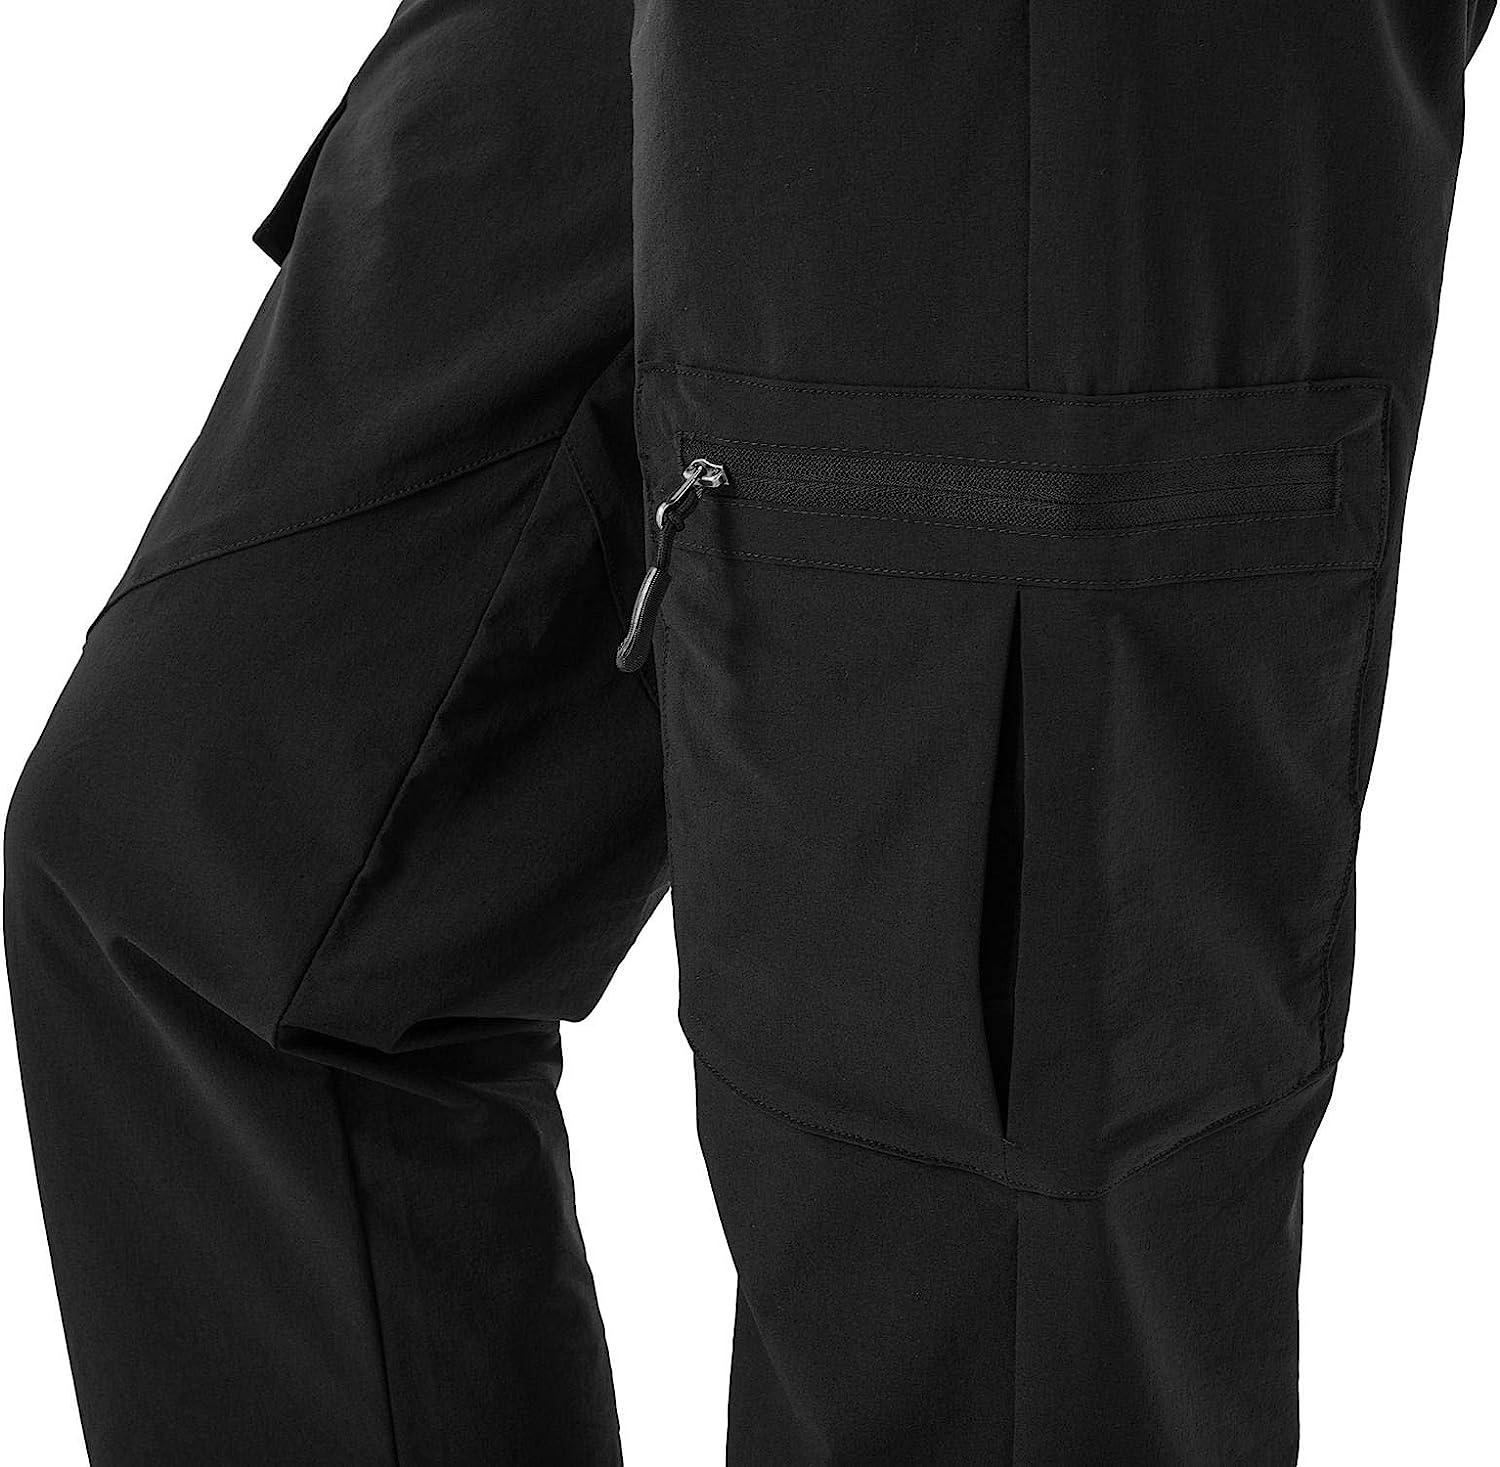 Rdruko Women's Hiking Cargo Pants Water-Resistant Quick Dry UPF 50